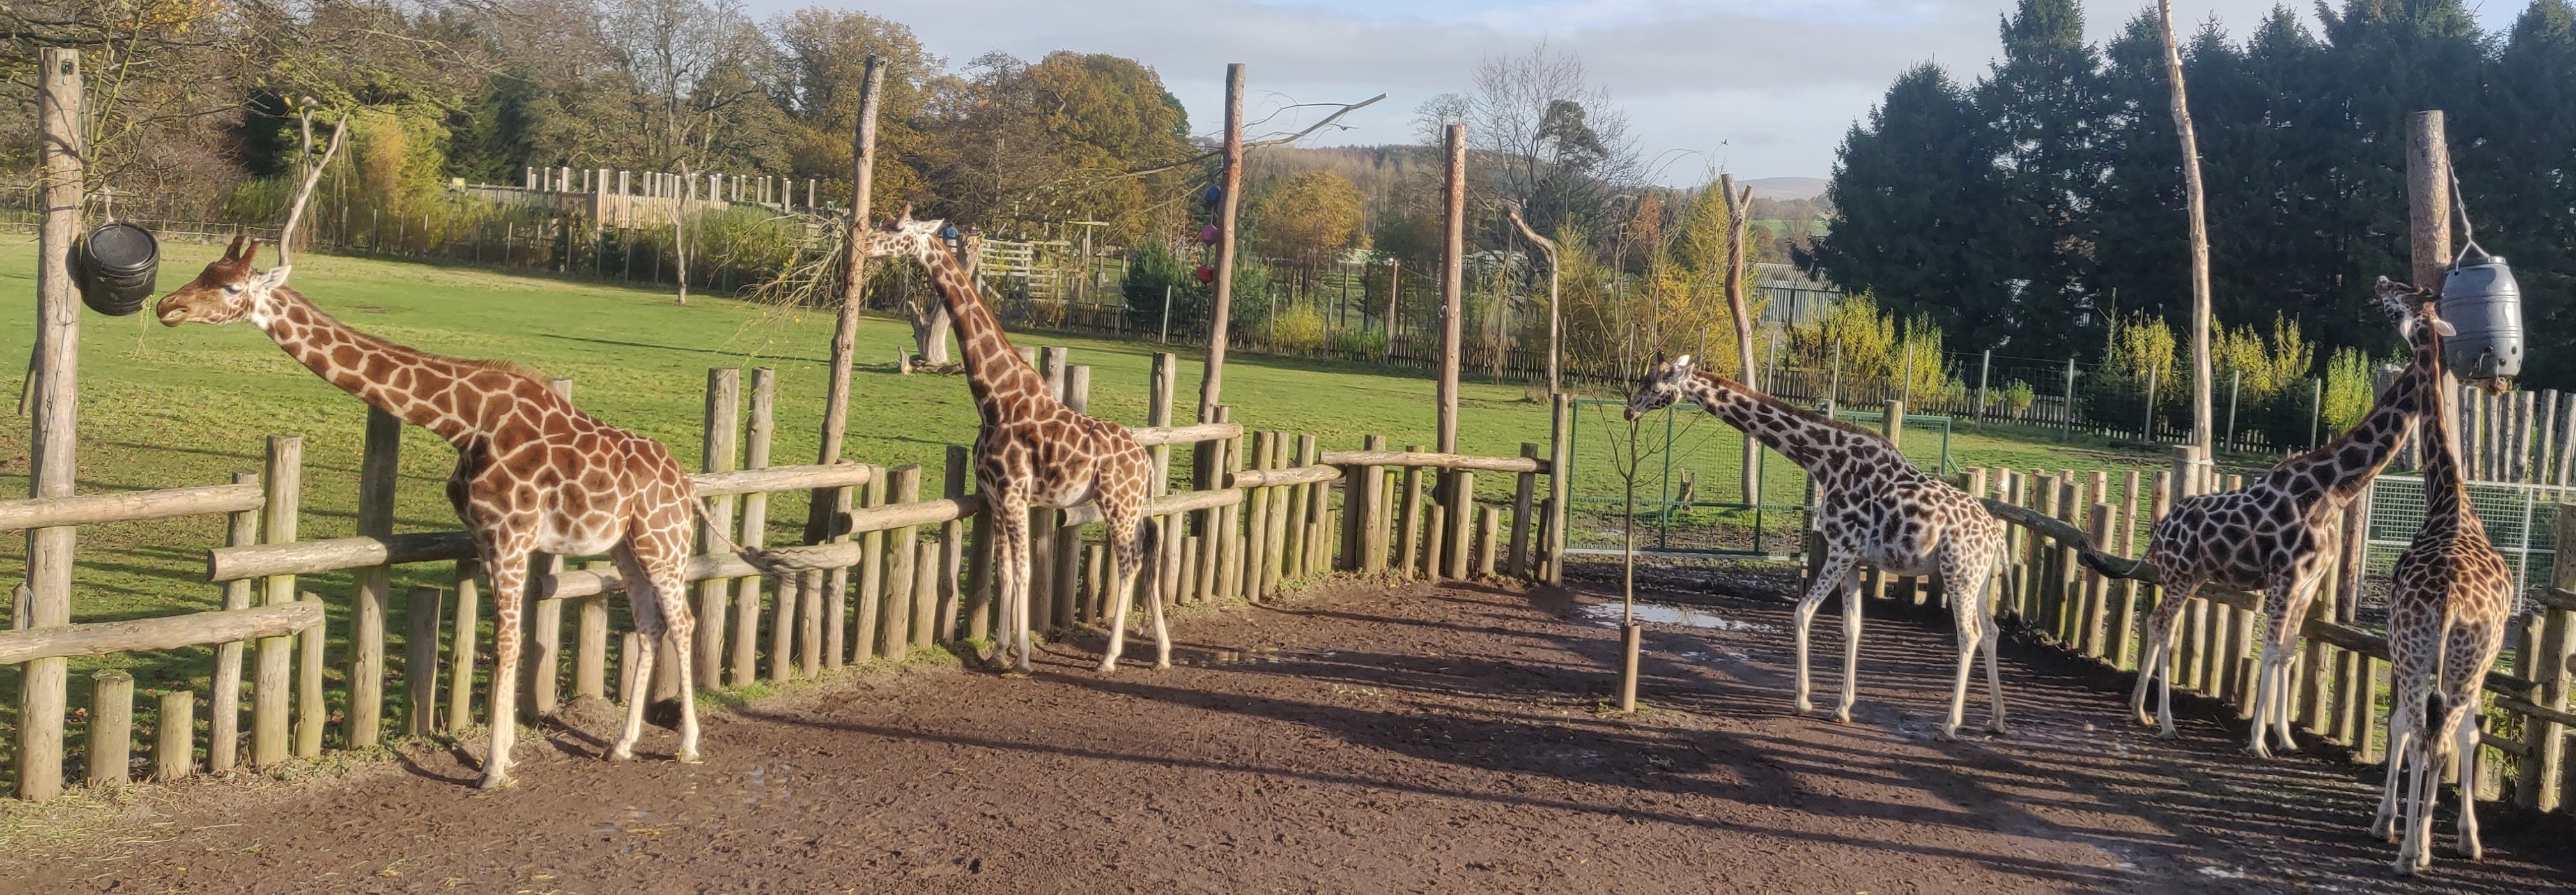 The giraffes at Blair Drummond.